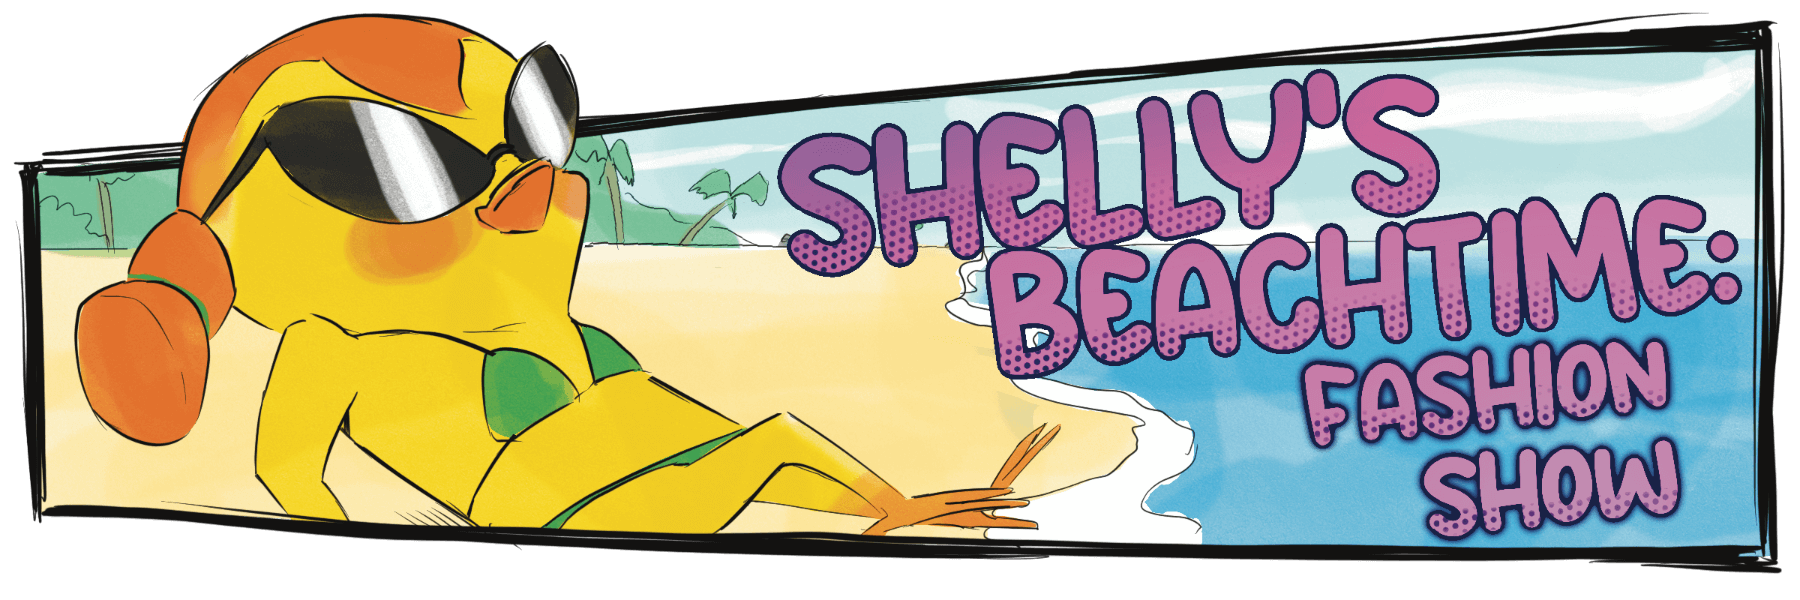 Shelly's beach time: Fashion Shoot